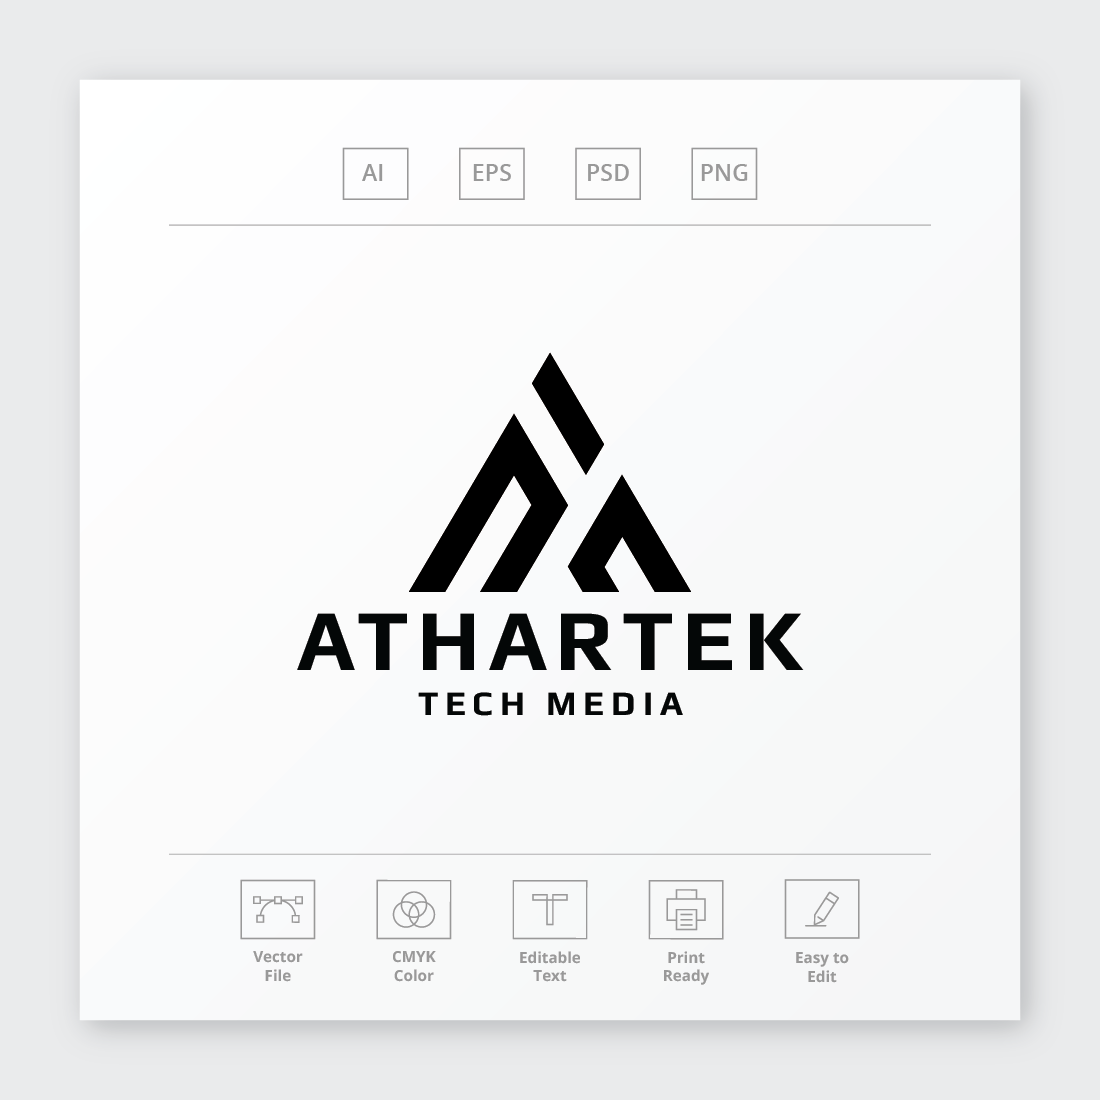 Athartek Letter A Logo preview image.